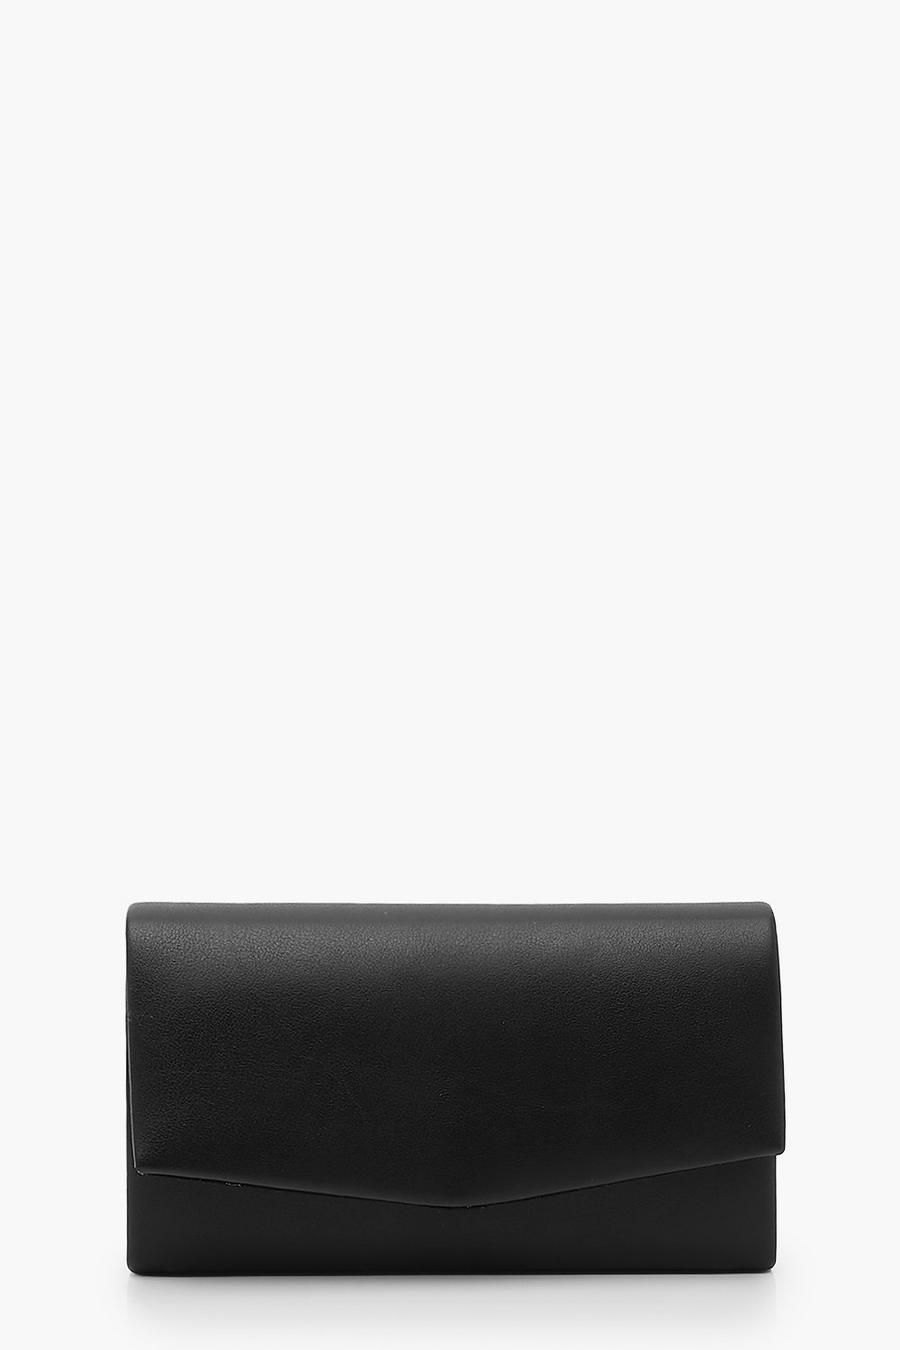 Black Smooth PU Structured Clutch Bag & Chain